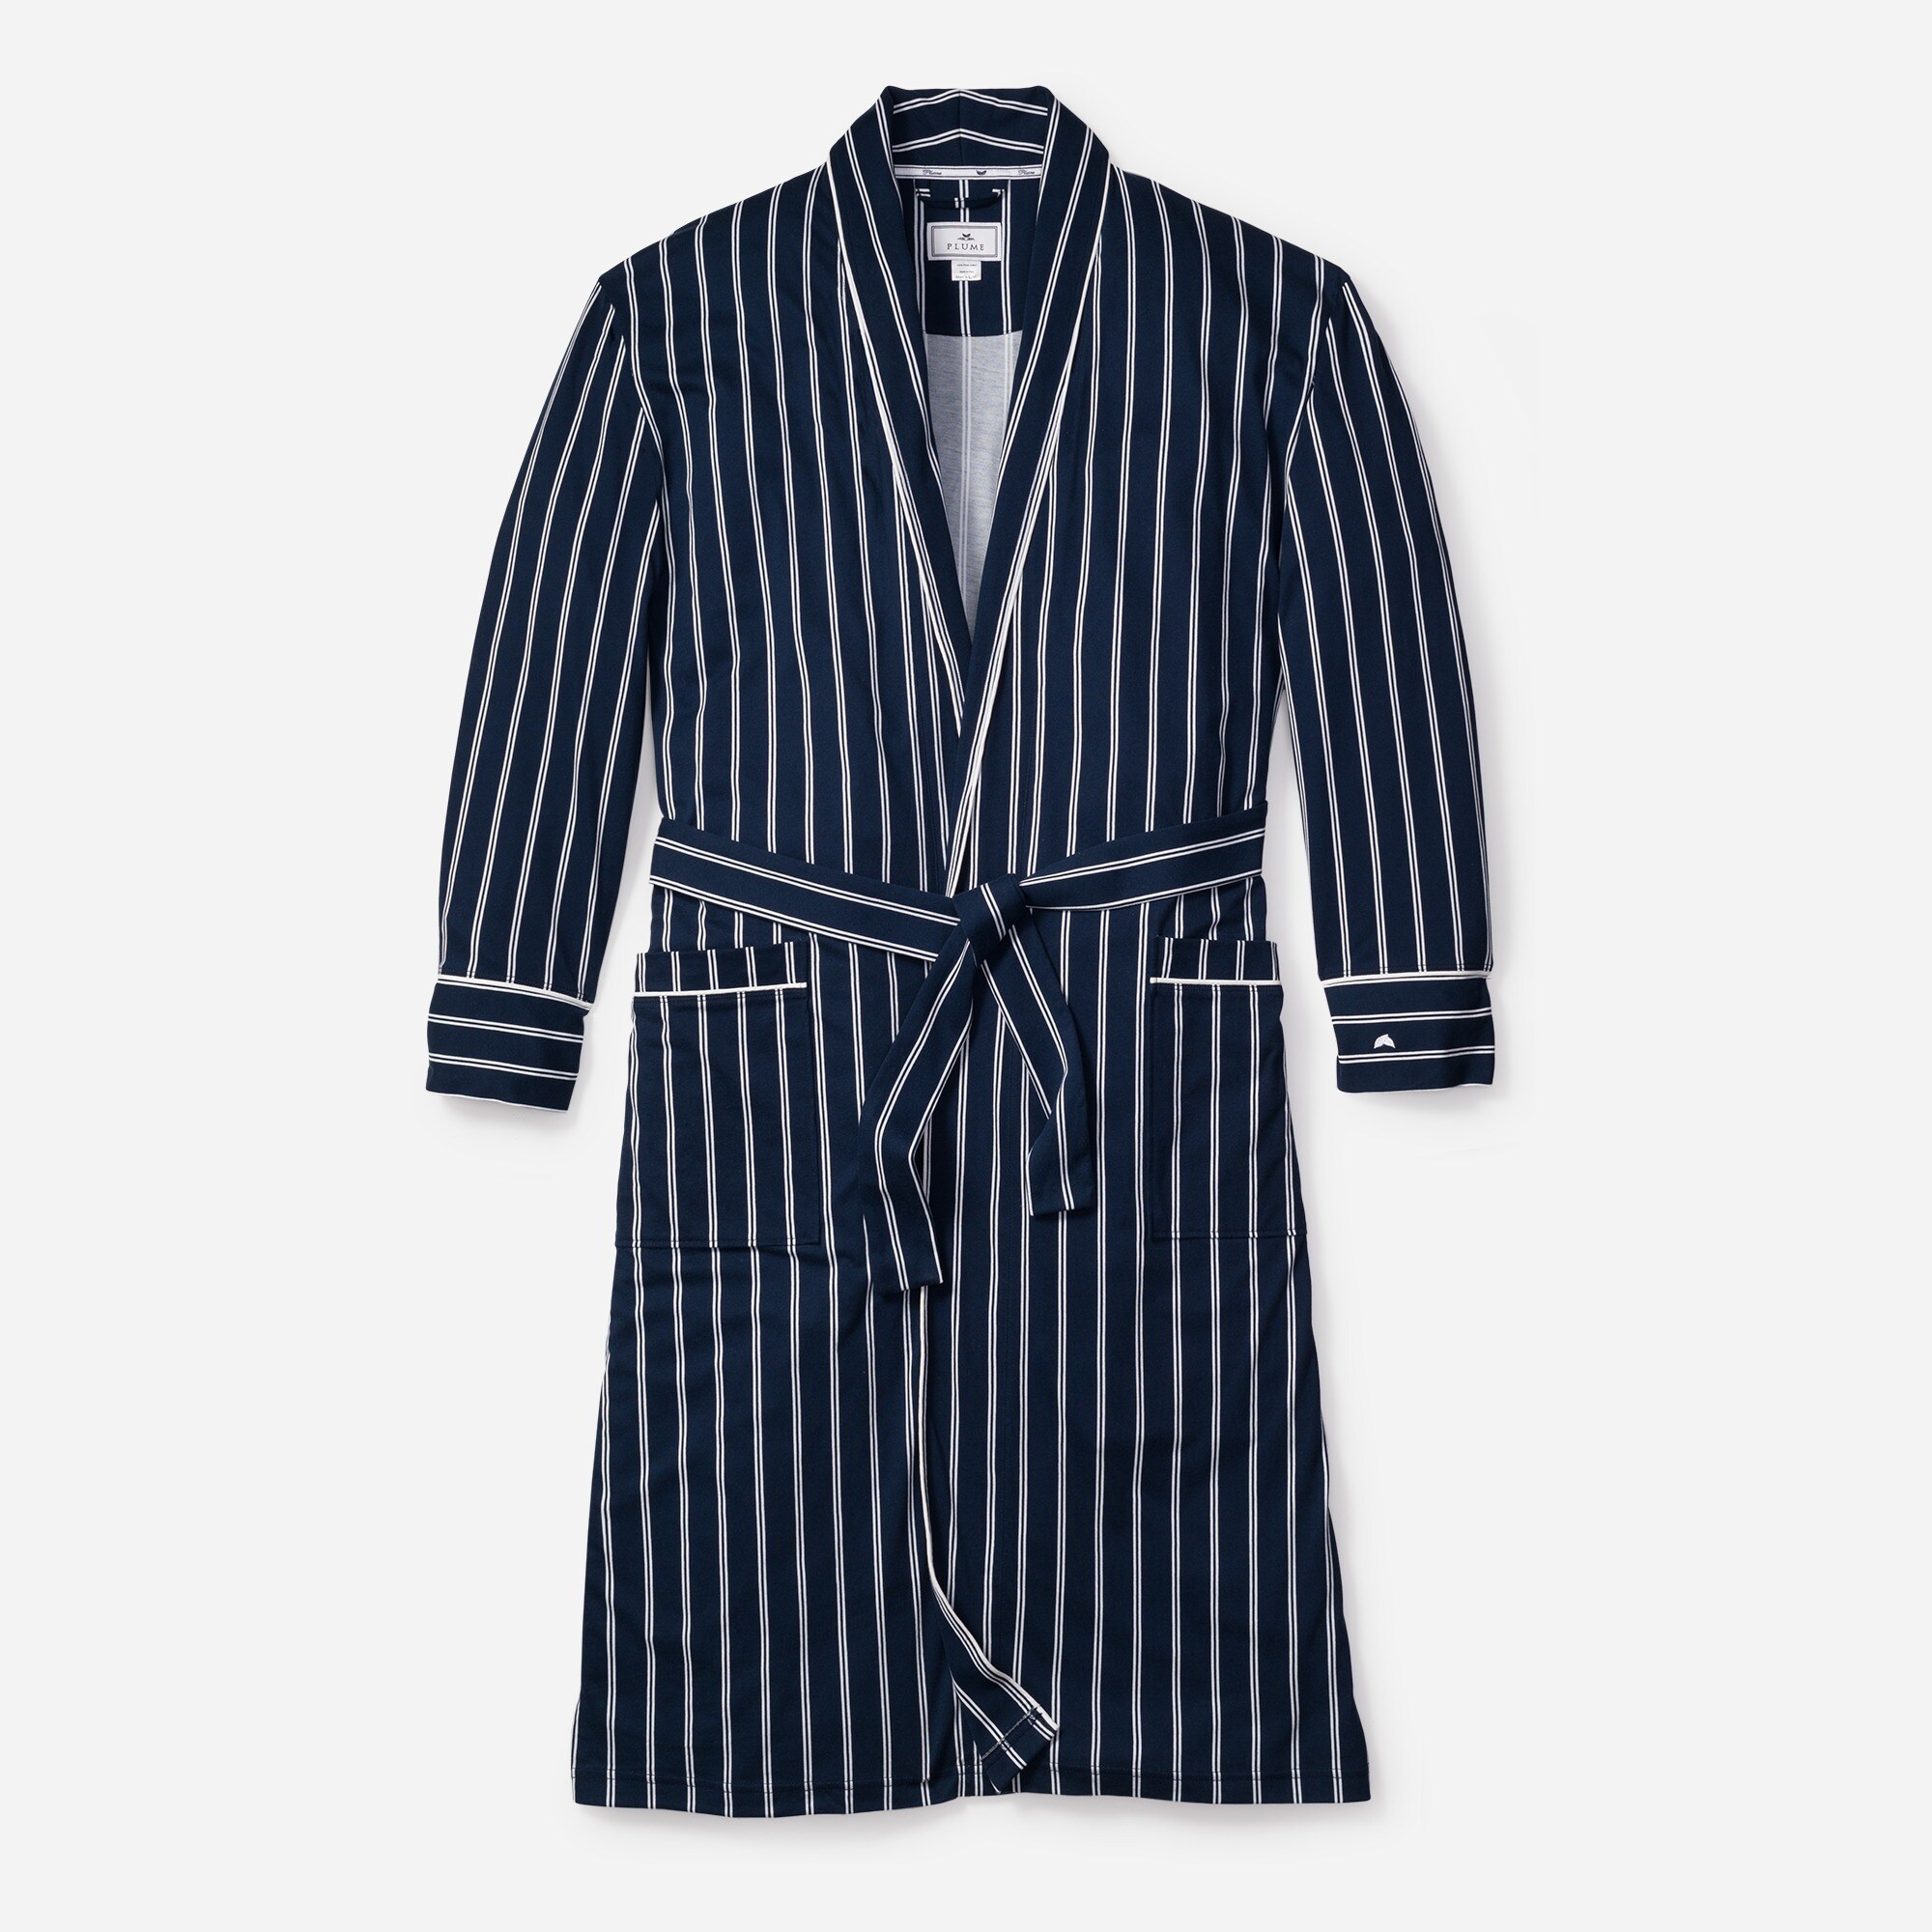  Petite Plume™ men's Pima cotton robe in pinstripe